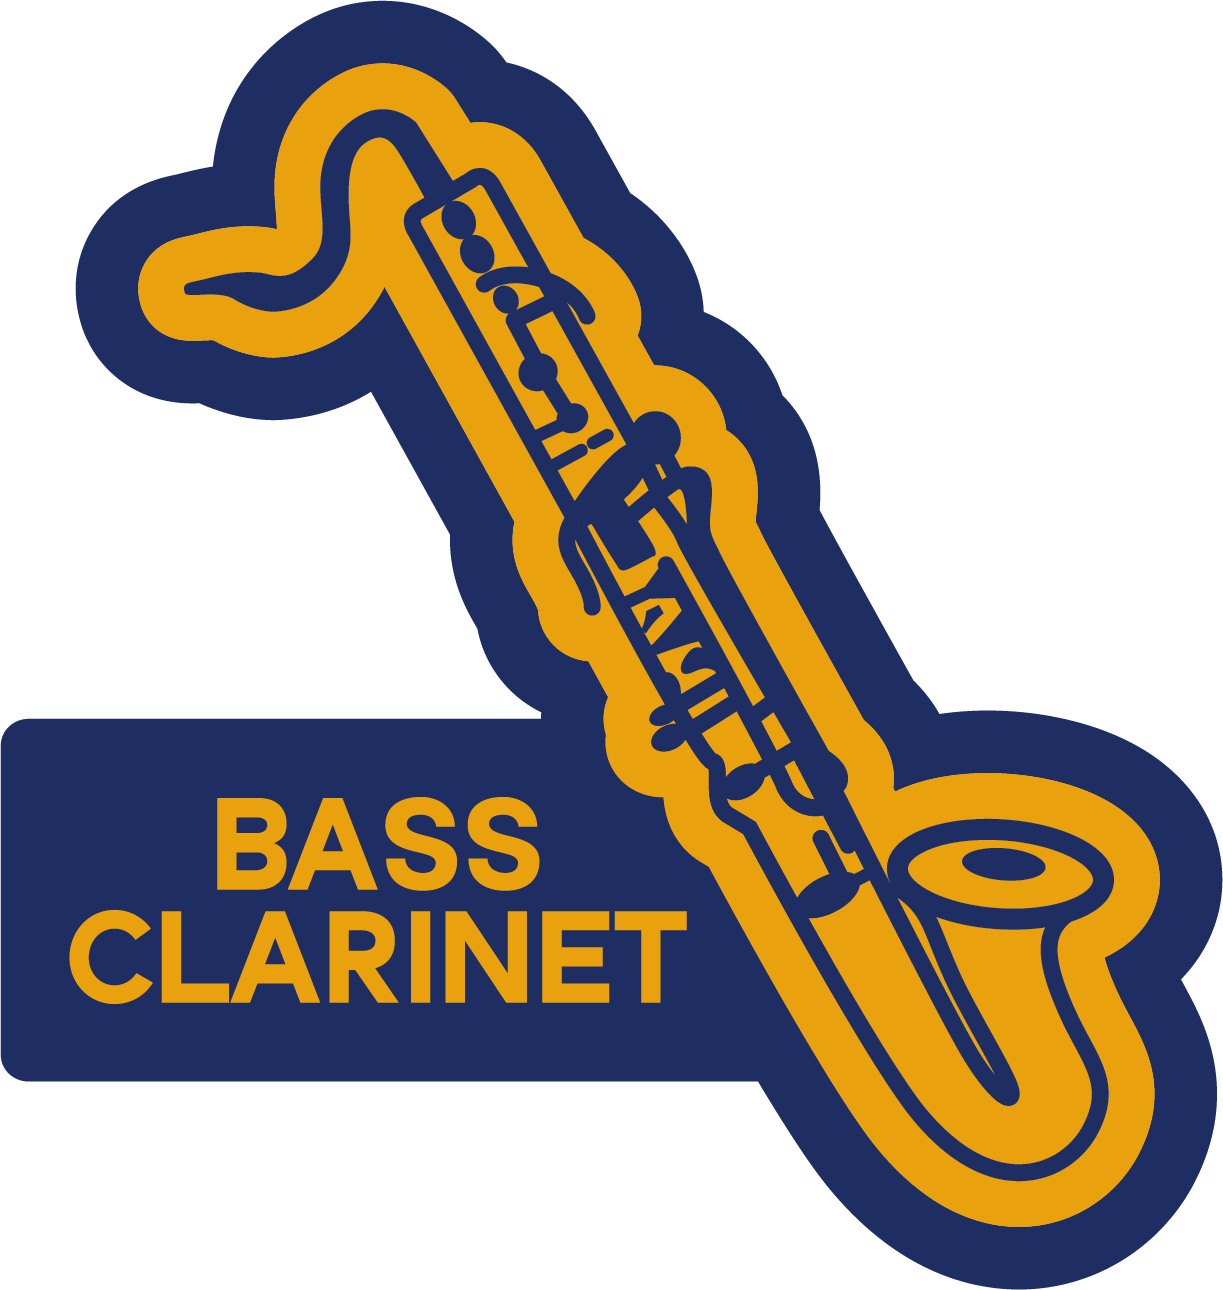 Bass Clarinet Sleeve Patch